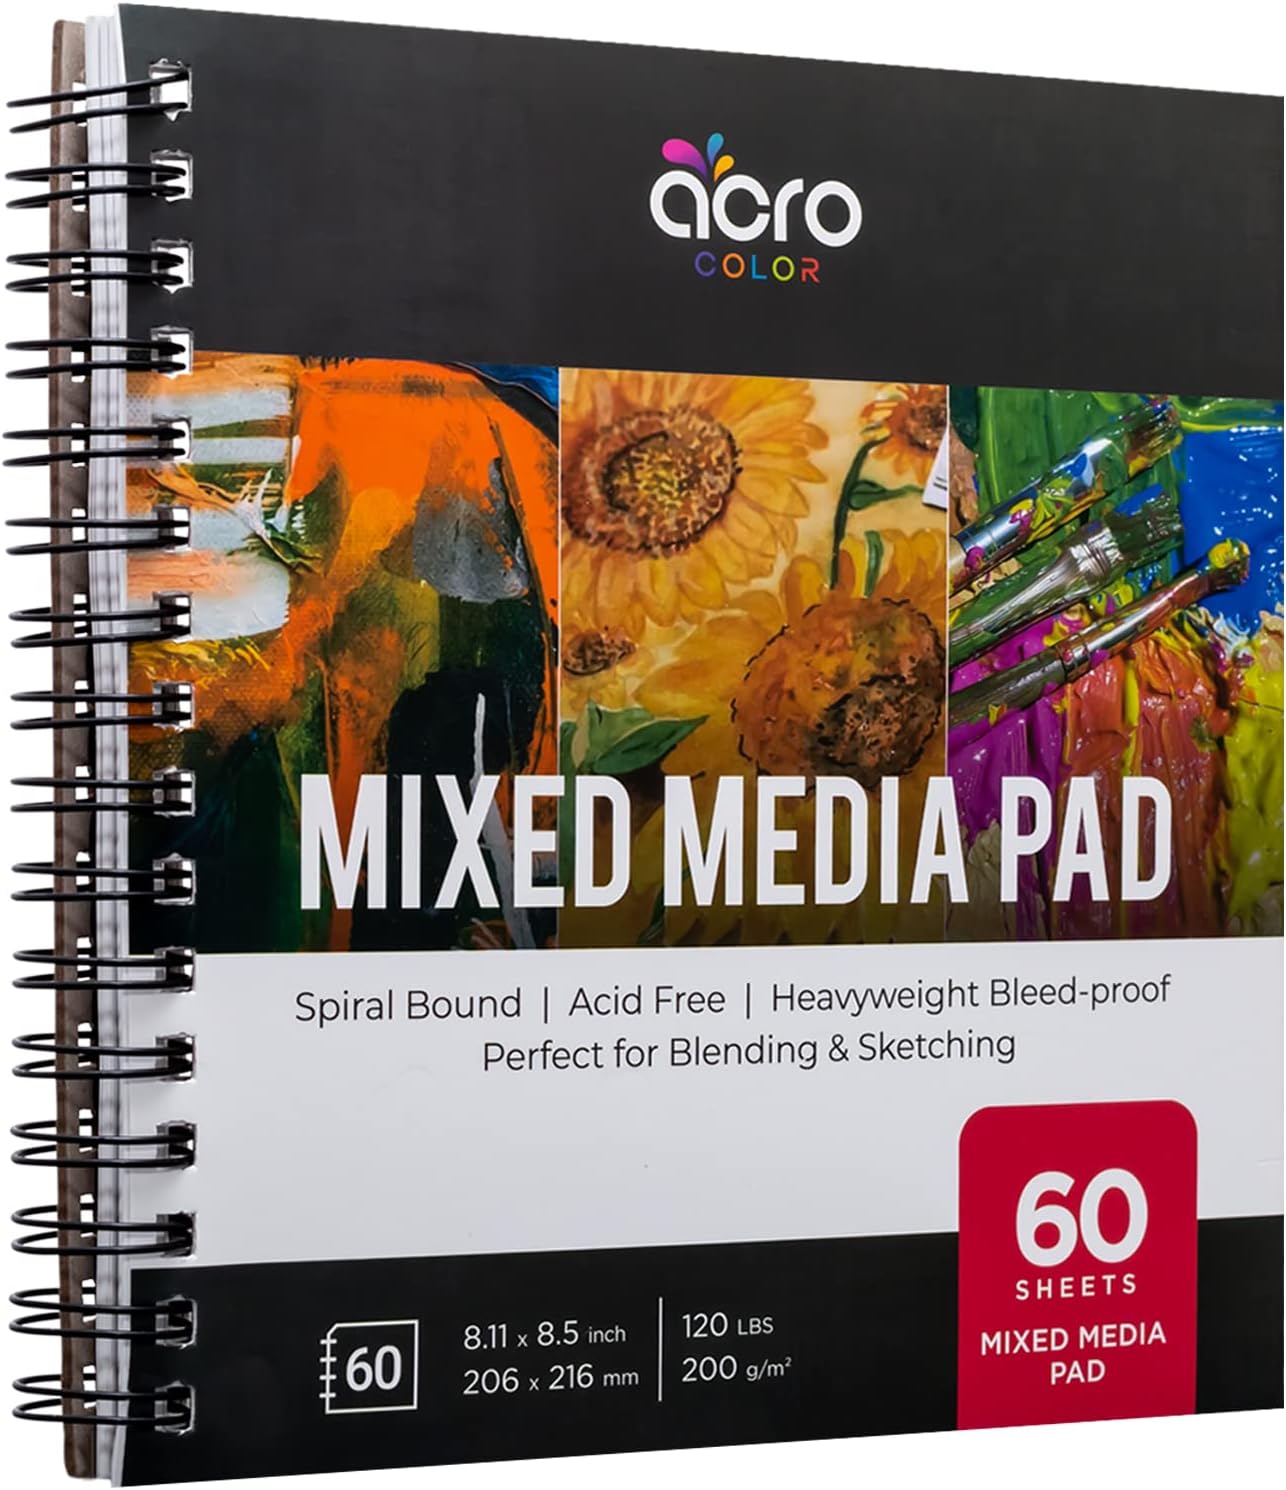 Mixed Media Sketchbook 8.11” x 8.5” | Spiral Bound [...]